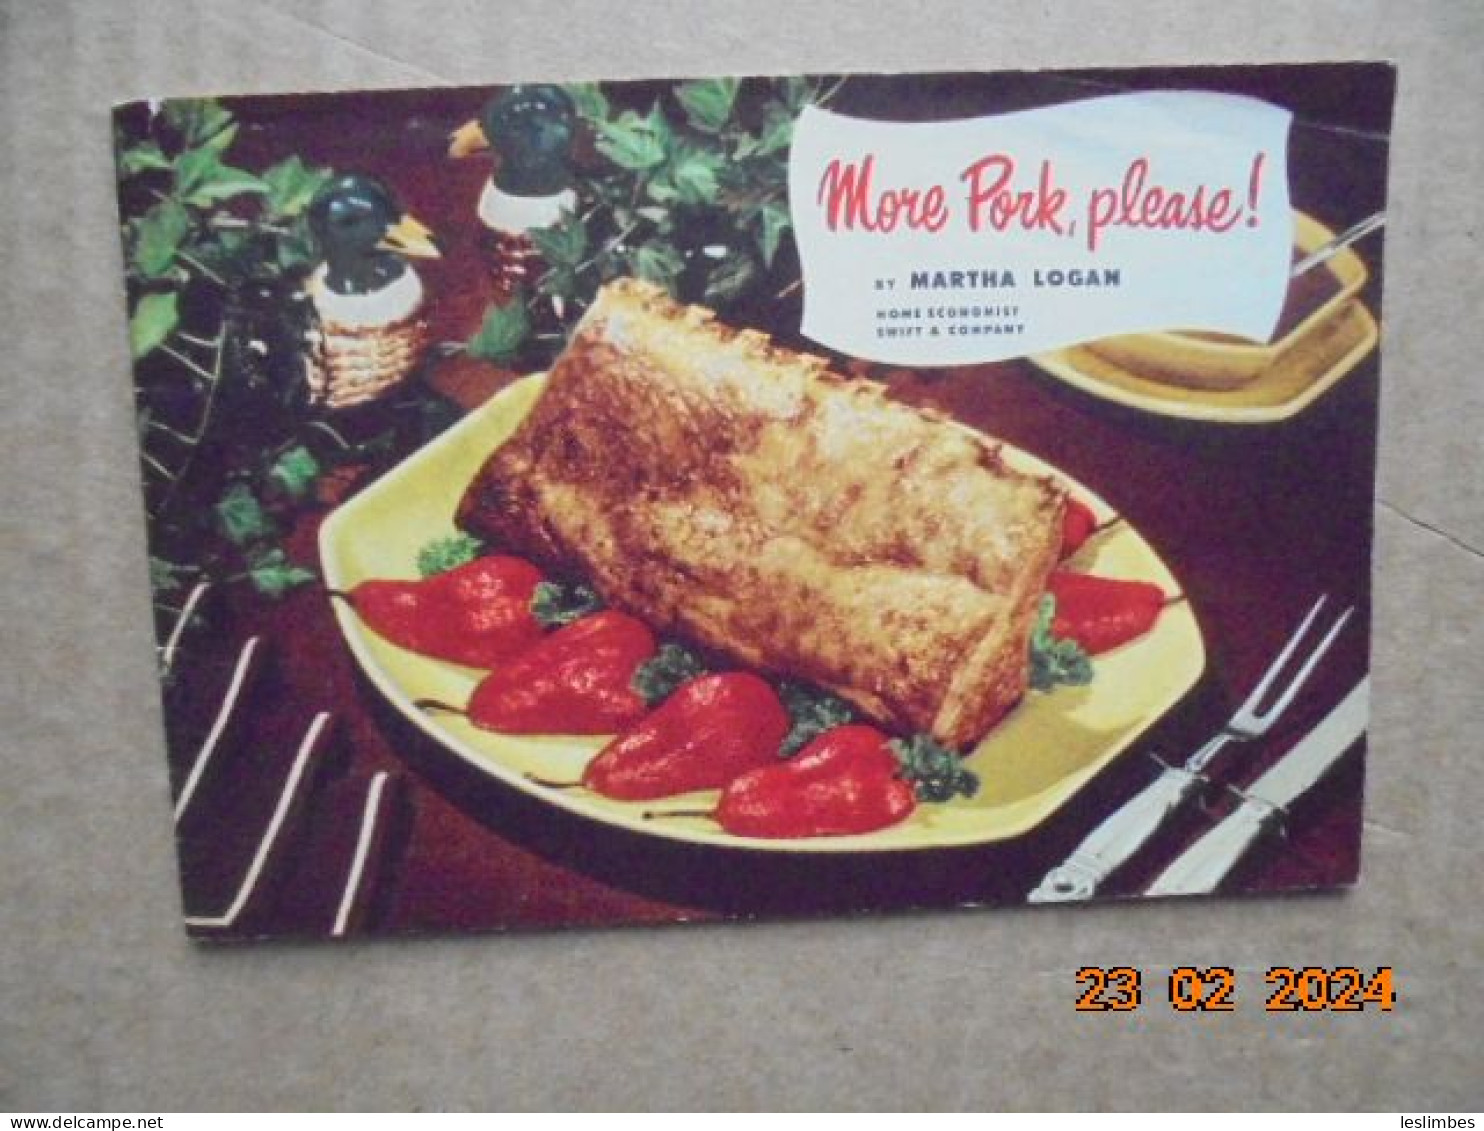 More Pork, Please! - Martha Logan - Swift & Company - American (US)